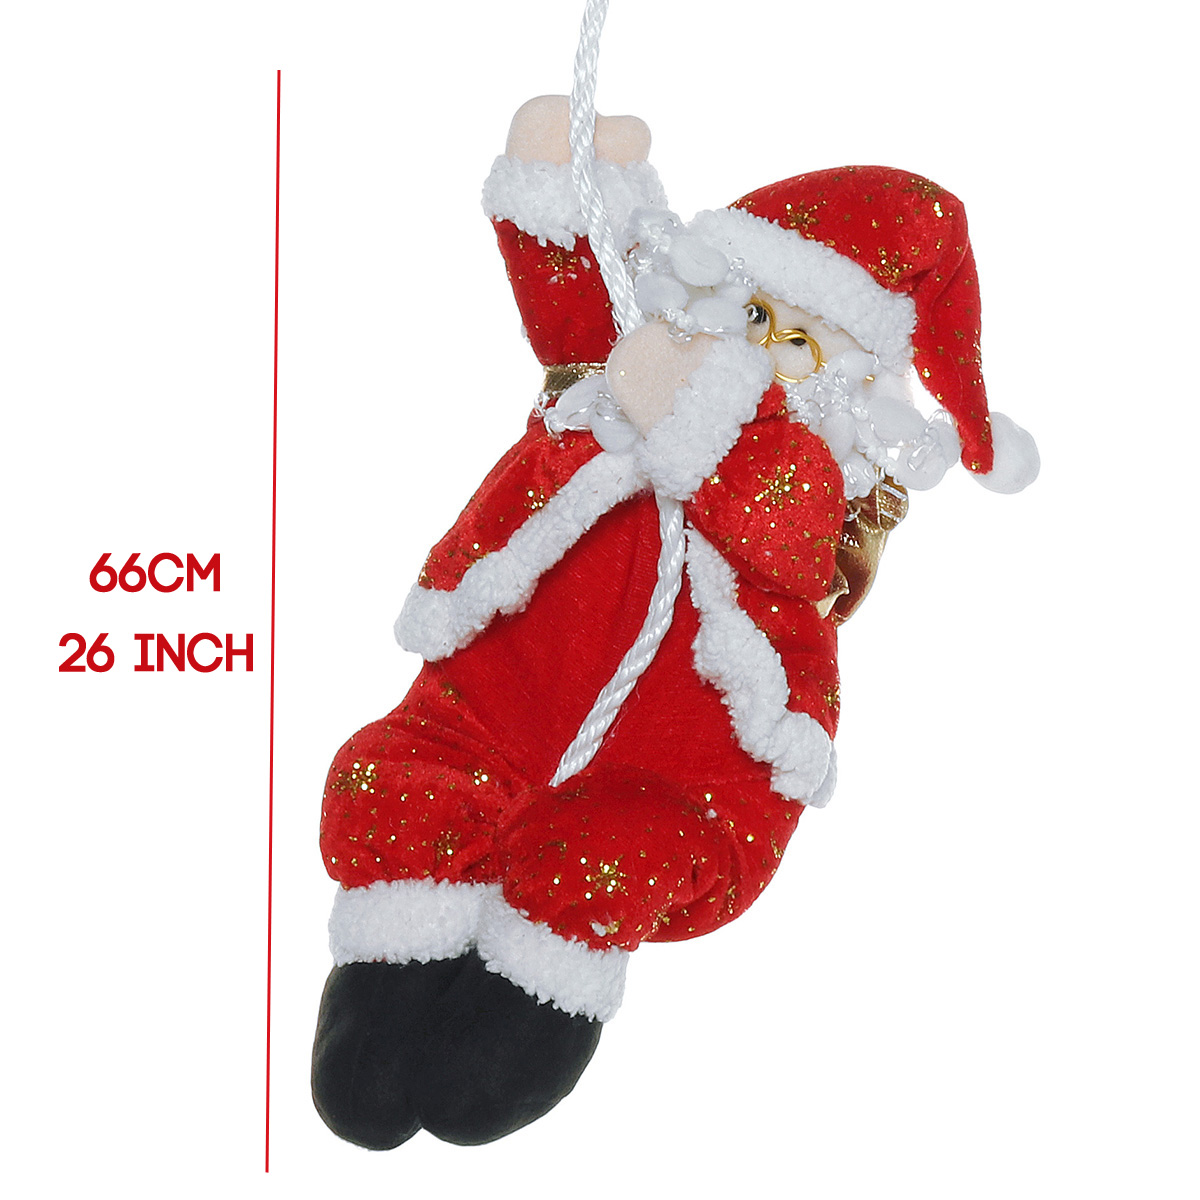 Santa-Climbing-On-Rope-Indoor-Outdoor-Christmas-Tree-Garden-Decorations-1590884-10